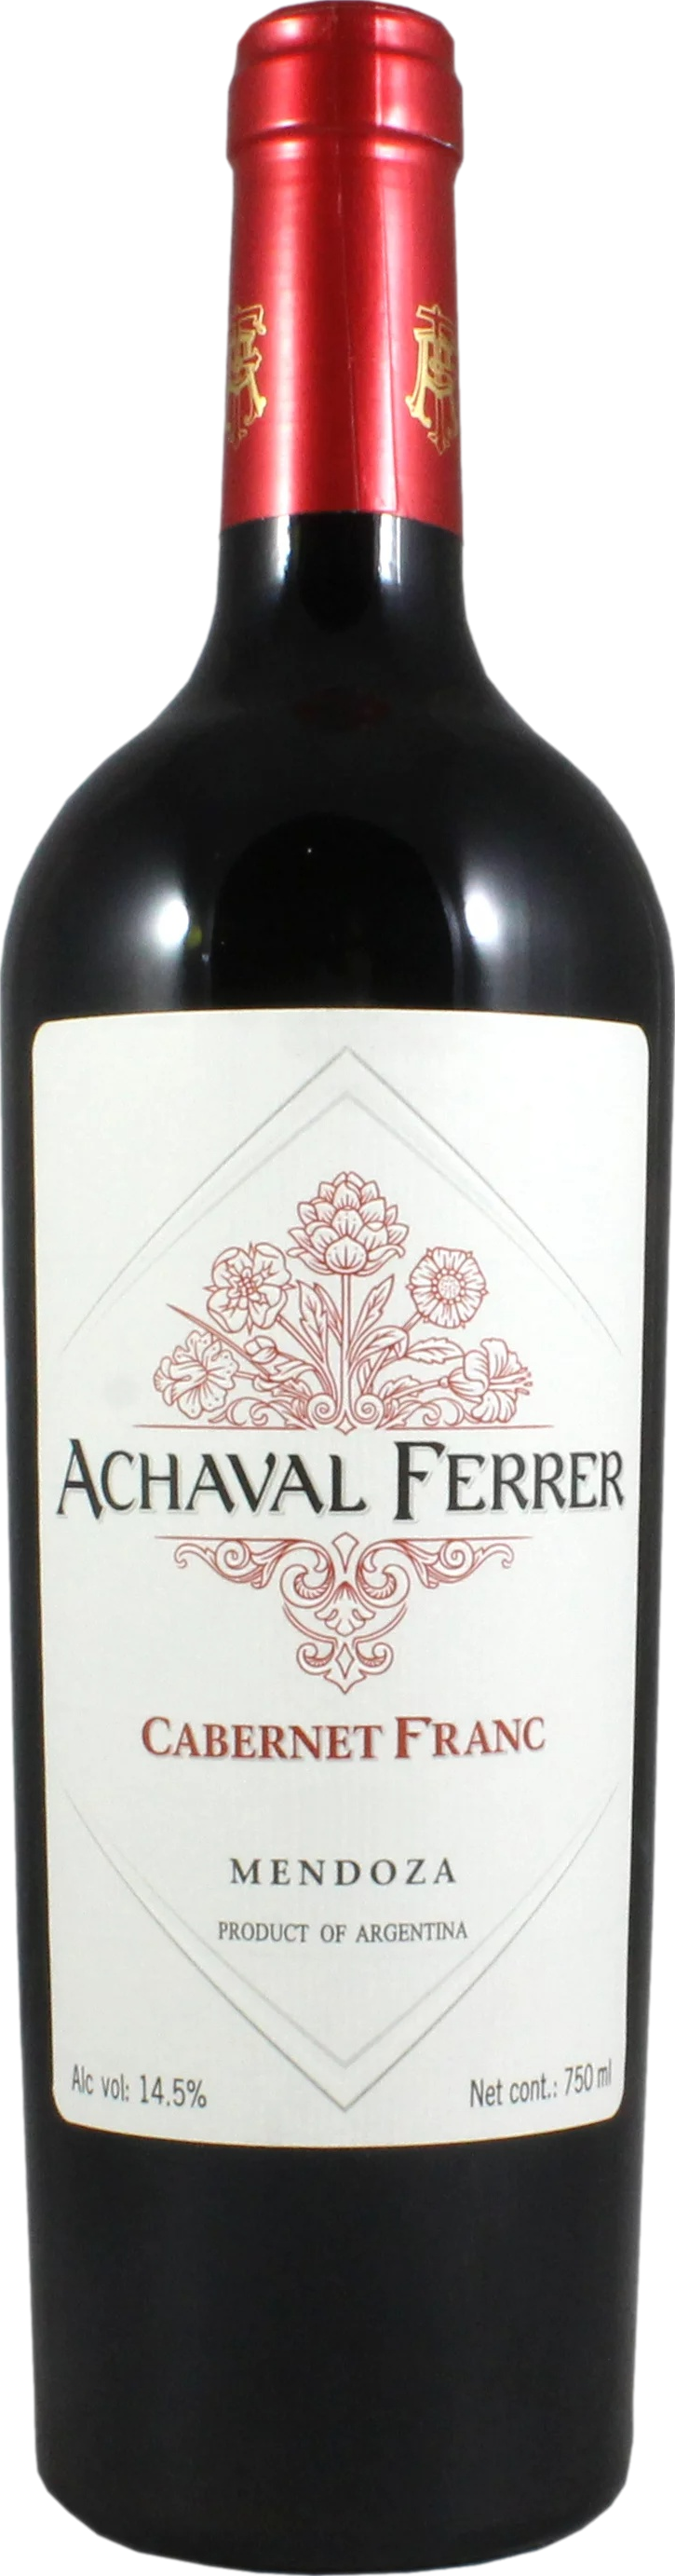 Achaval Ferrer Cabernet Franc 2019